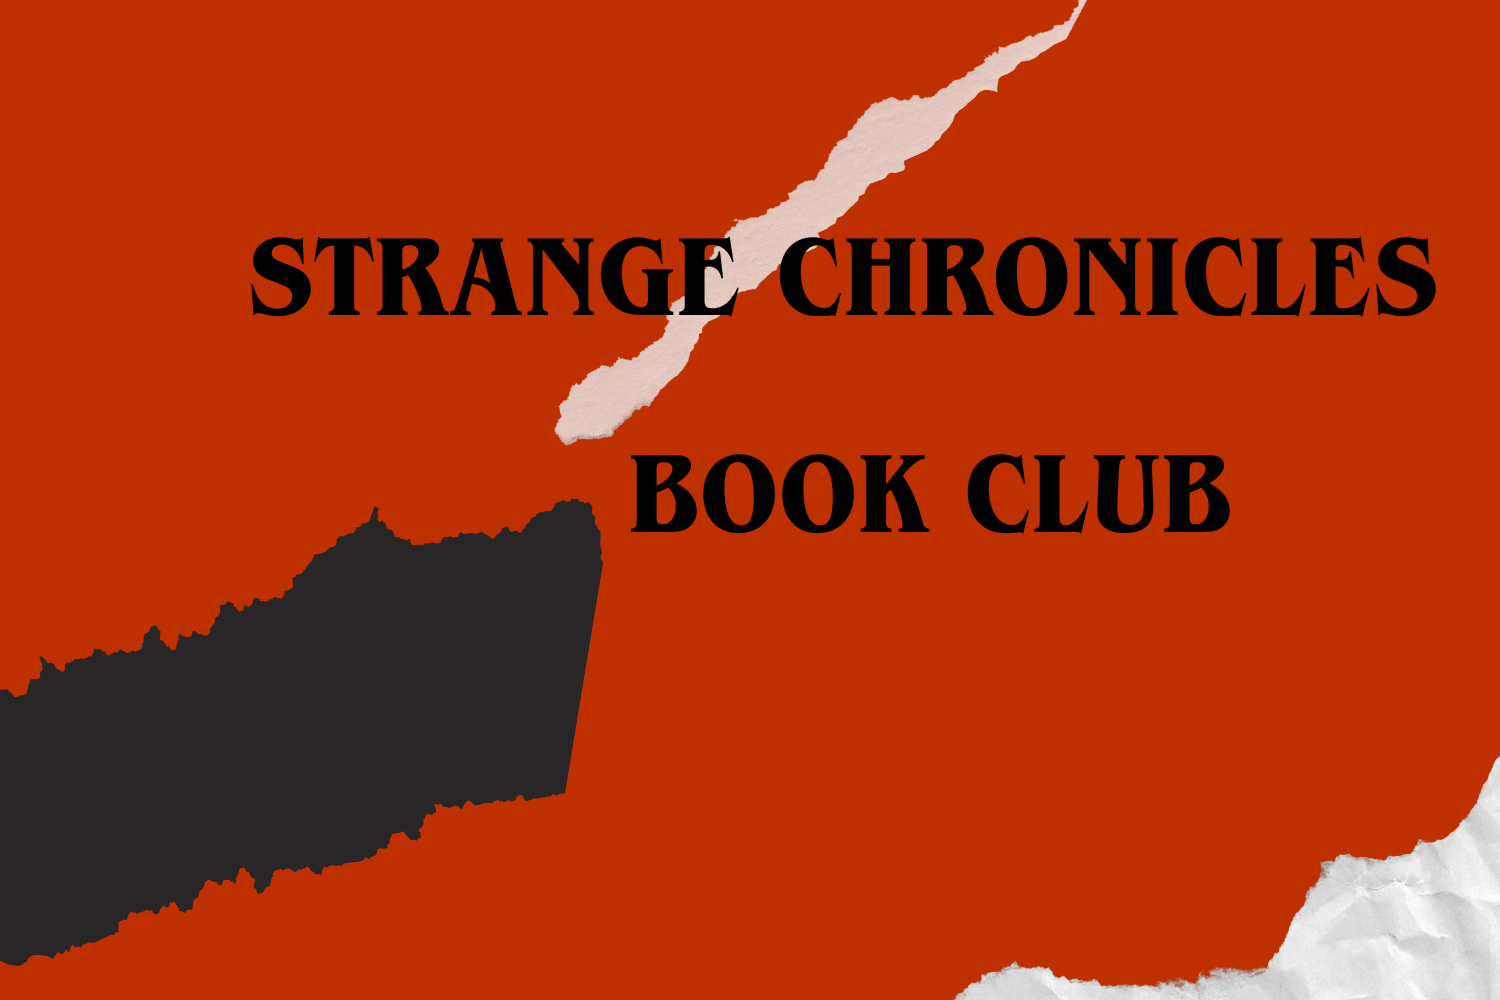 Strange Chronicles Book Club